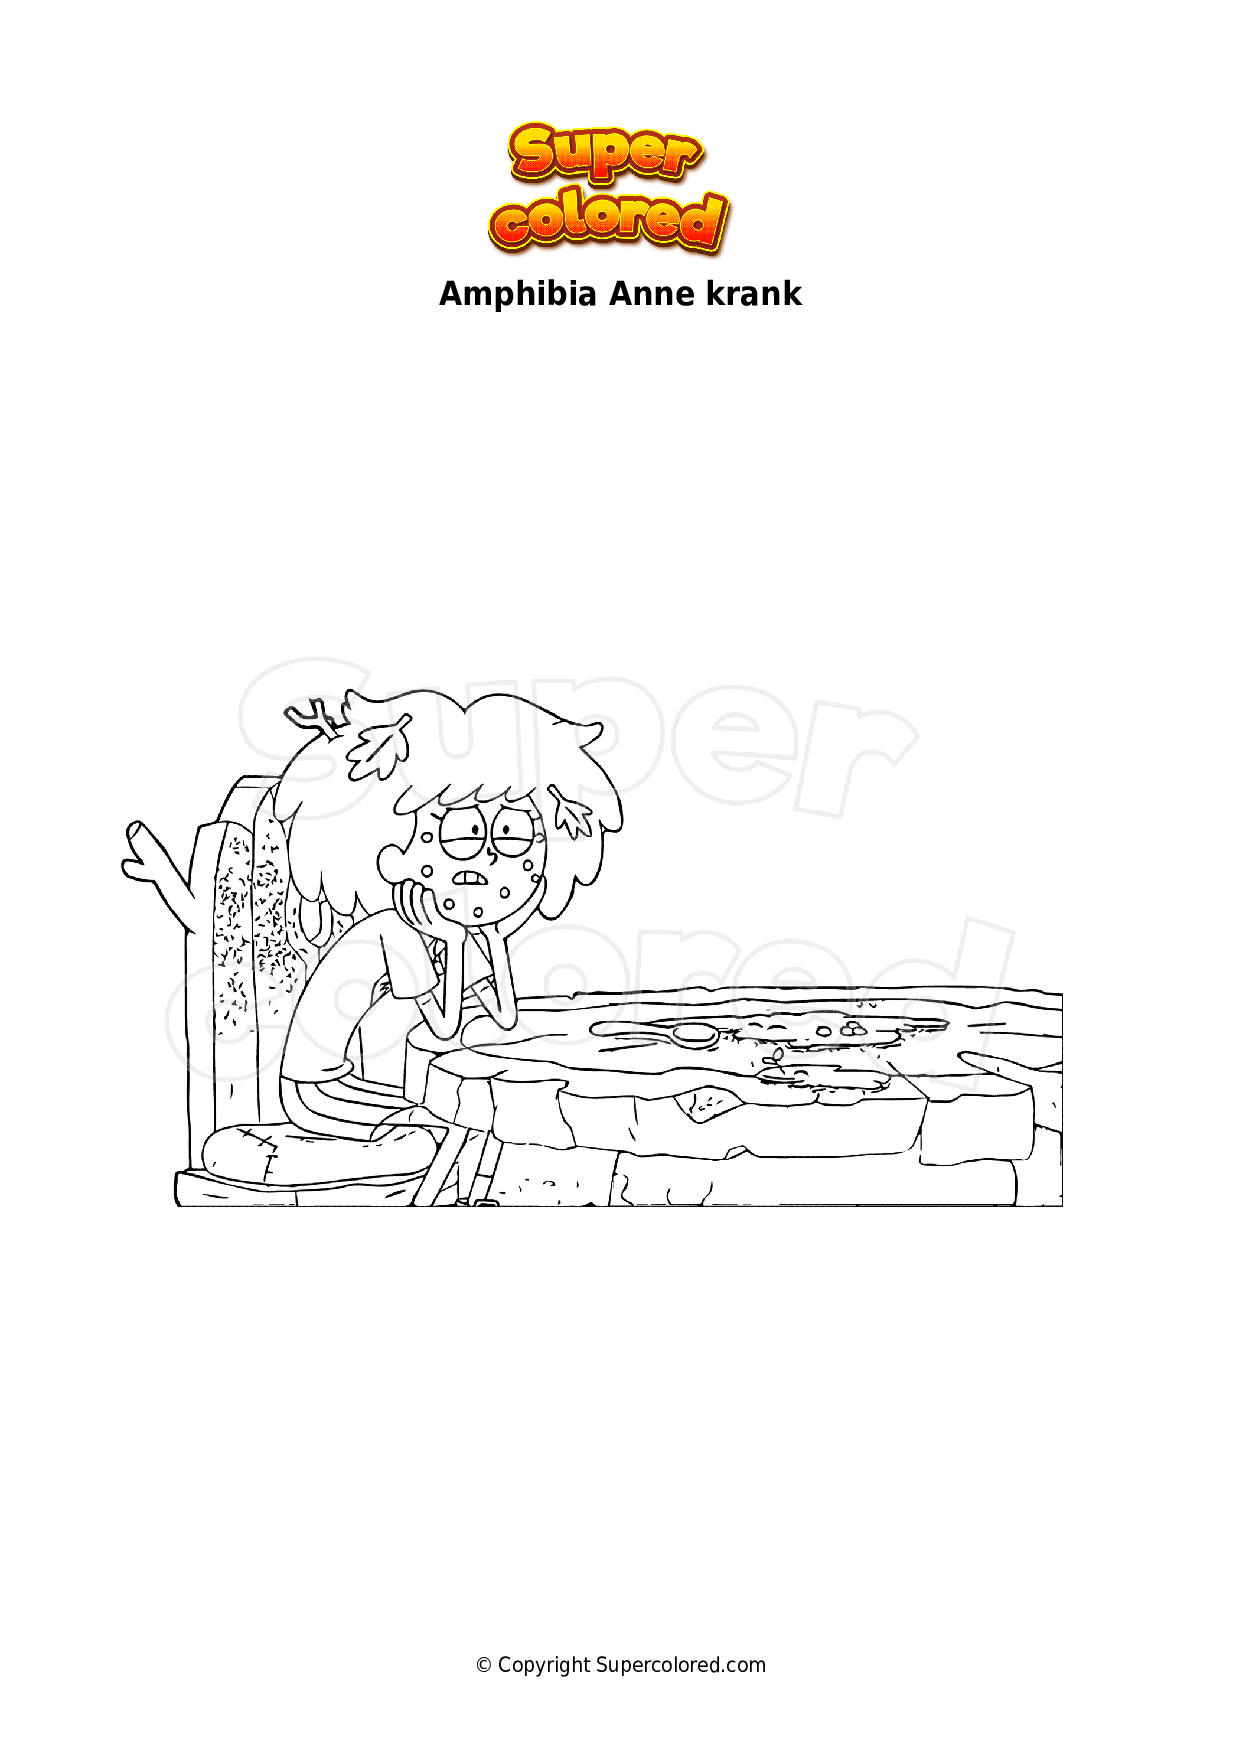 Ausmalbild Amphibia Anne krank - Supercolored.com